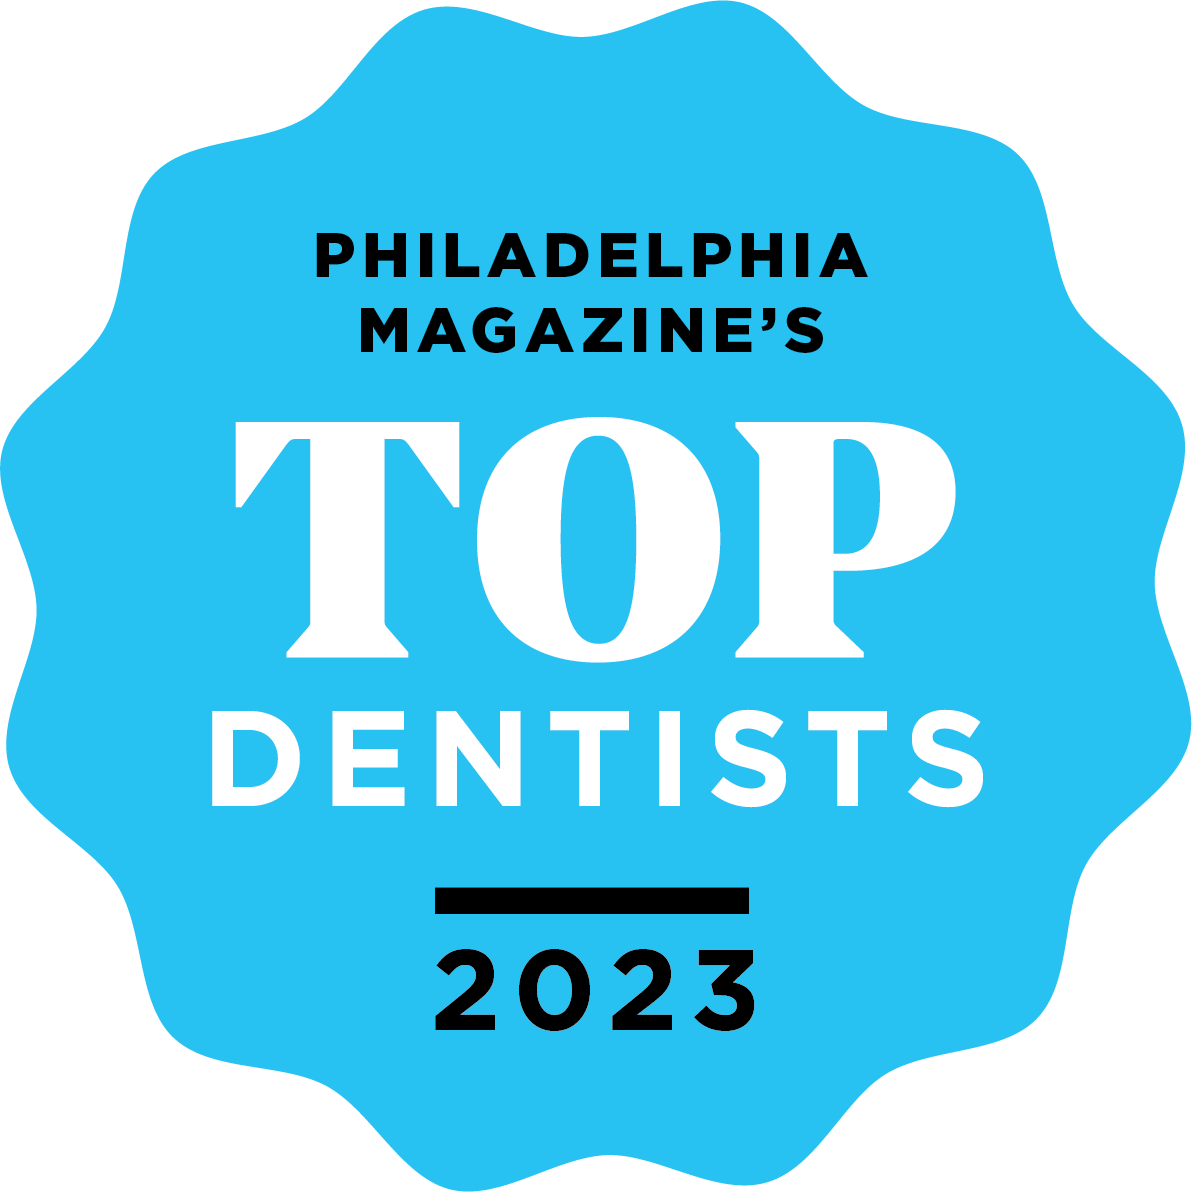 Top Dentist Philadelphia Magazine